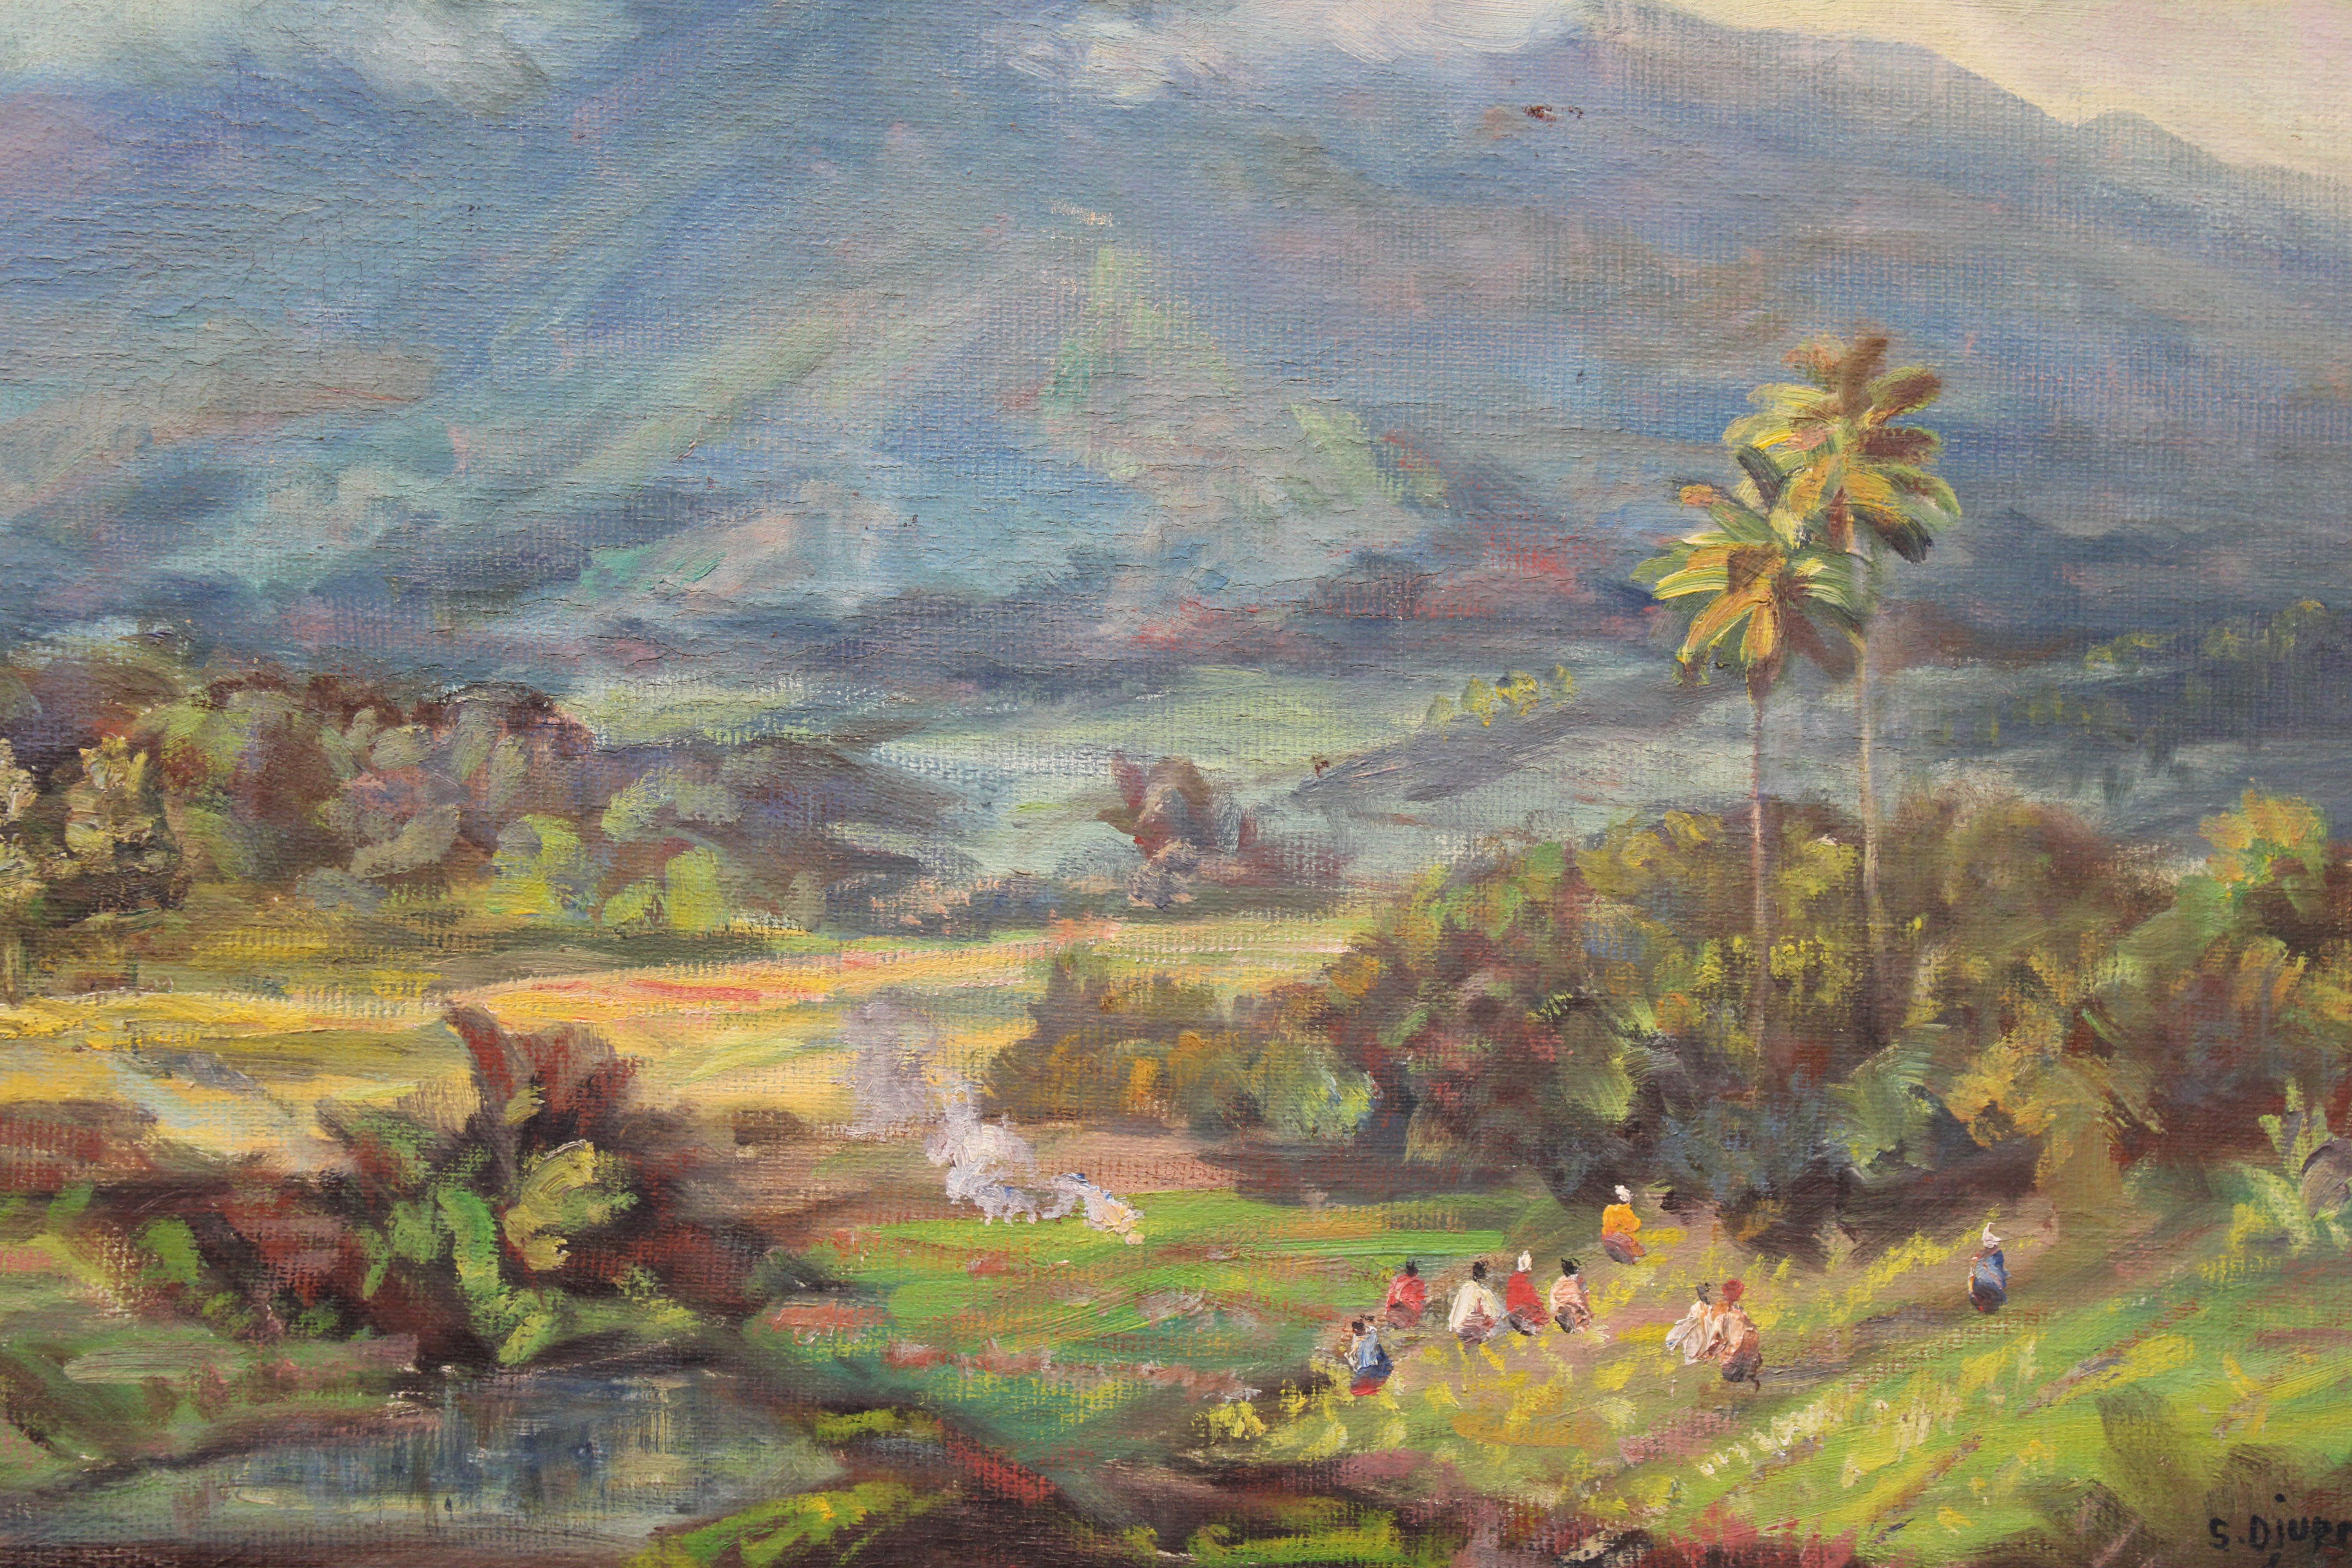 philippine landscape painting